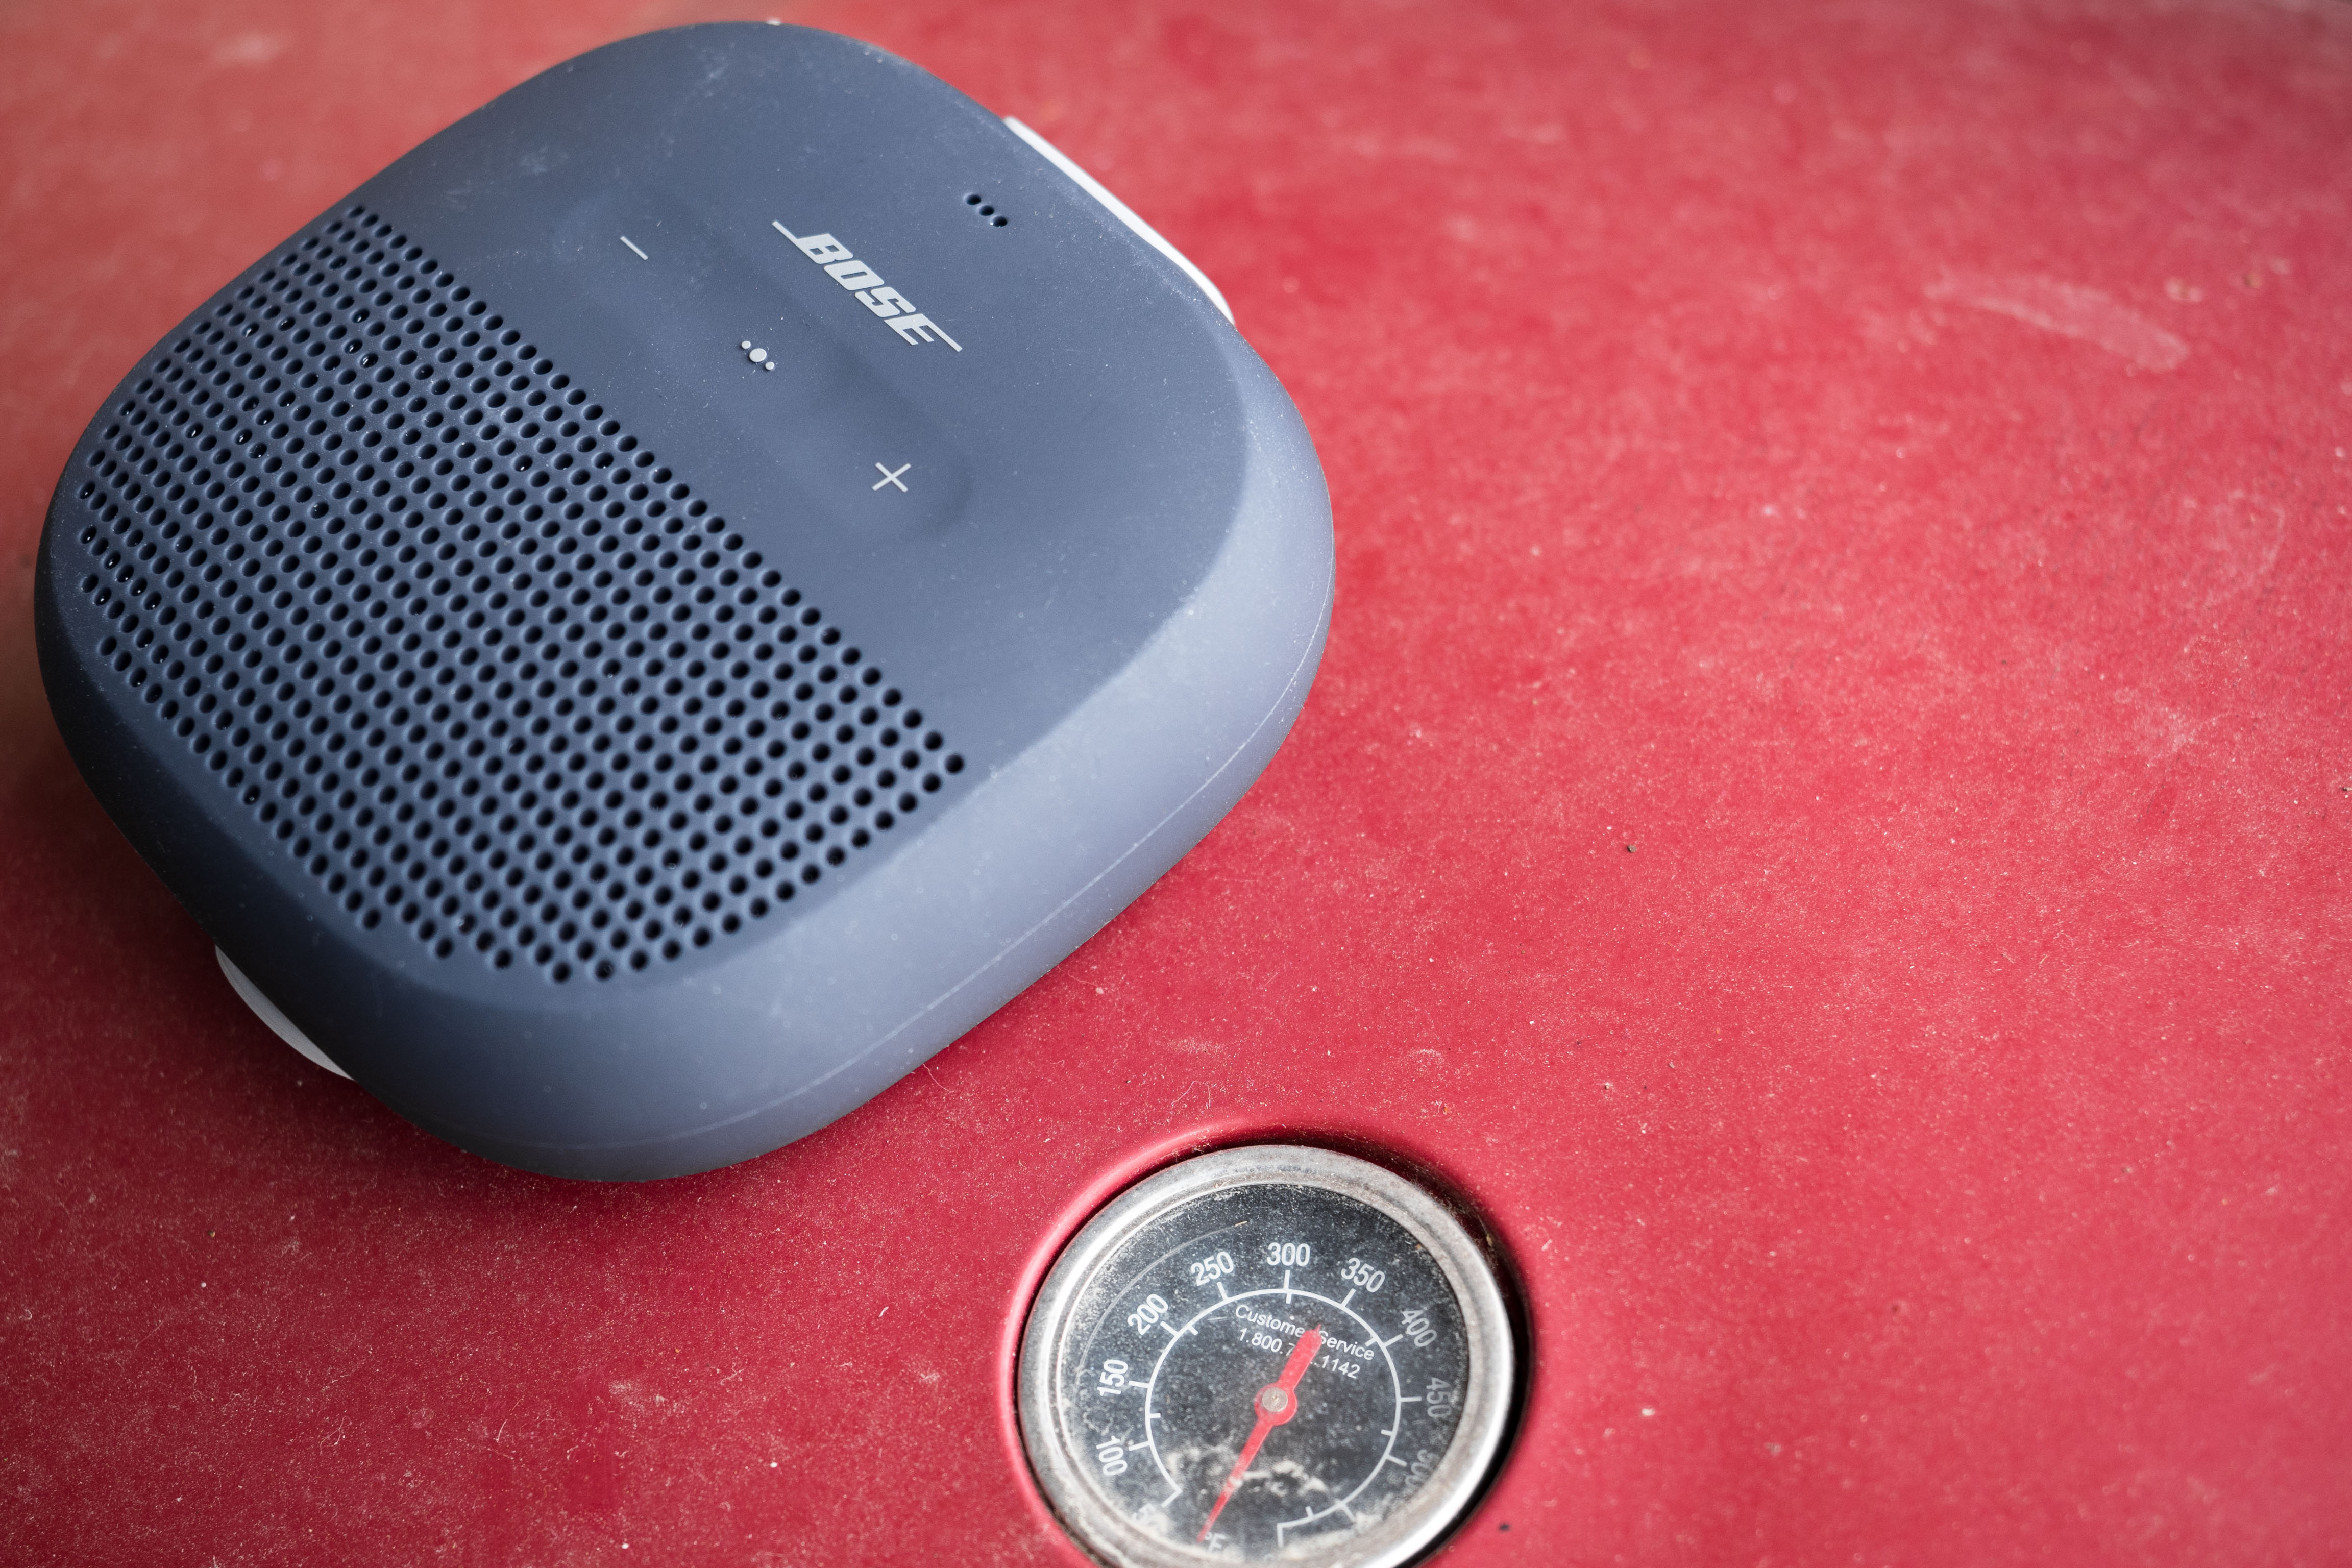 Bose SoundLink Micro review: Micro size, macro sound - SoundGuys